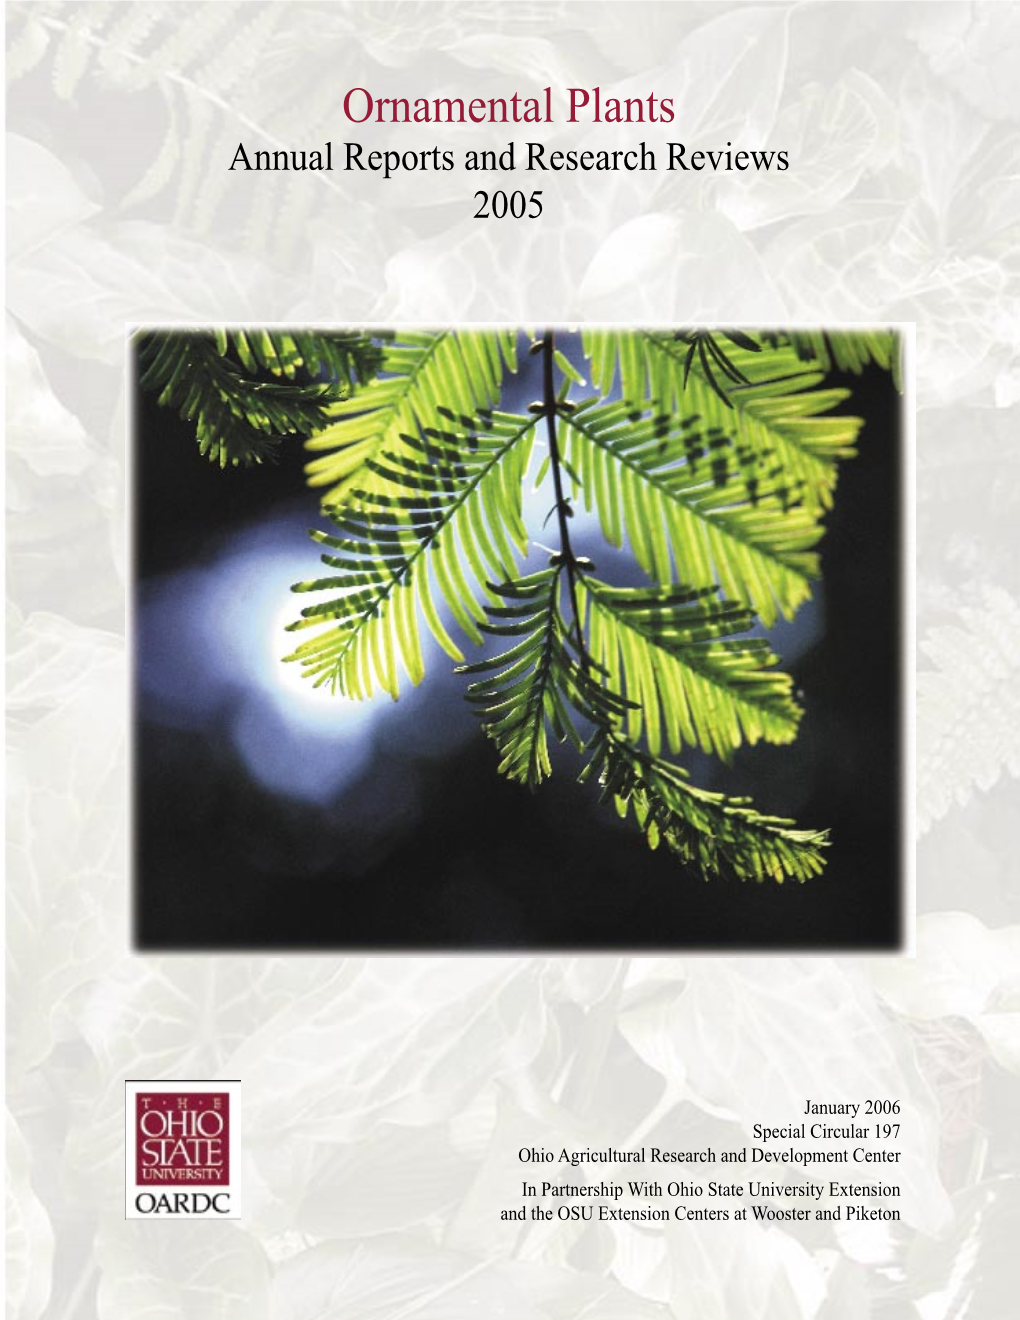 Ornamental Plants Ornamental Plants Annual Reports and Research Reviews 2005 Annual Reports and Research Reviews 2005 OARDC Special Circular 197